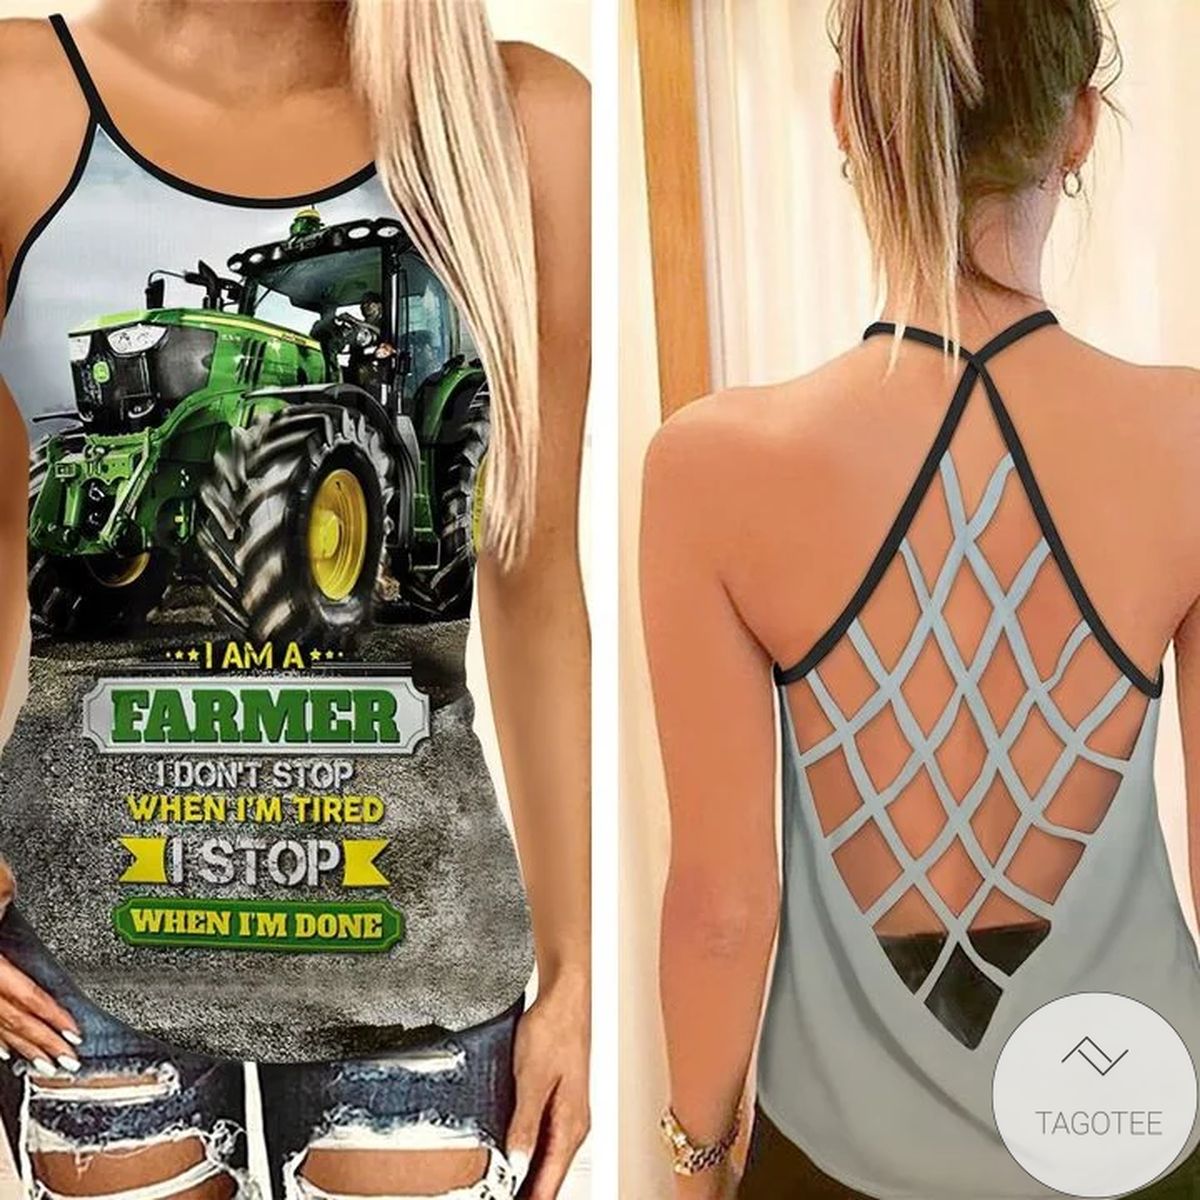 John Deere Tractor I'm A Farmer I Don't Stop When I'm Tired Criss Cross Tank Top